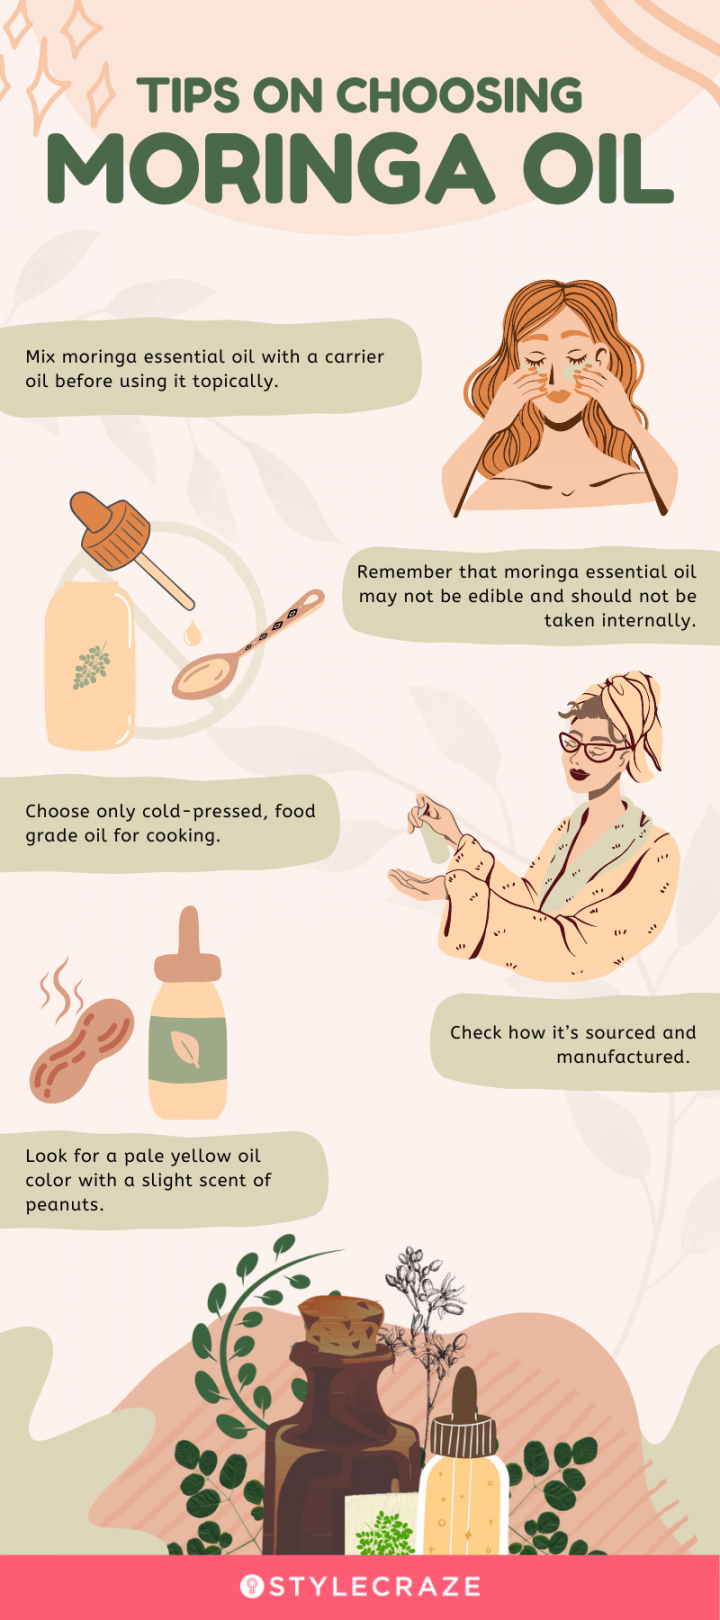 tips to choosing moringa oil [infographic]